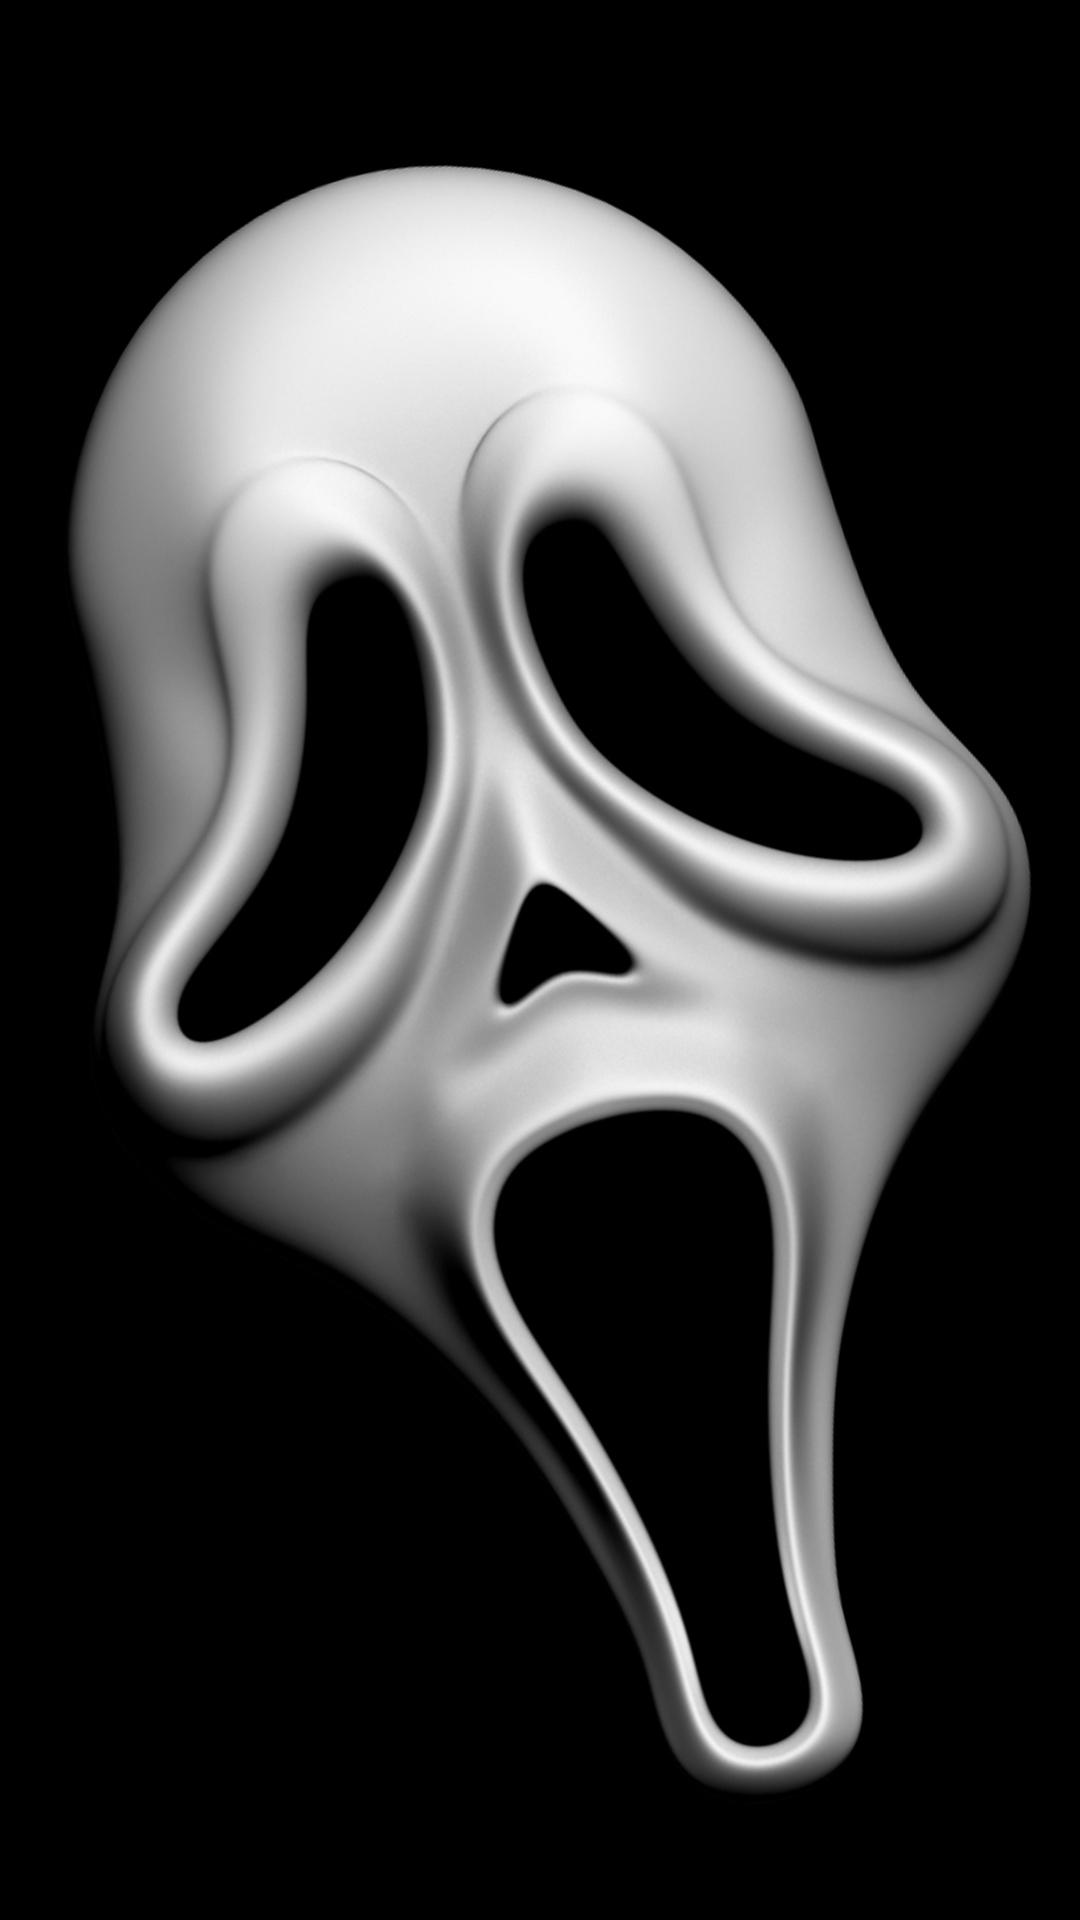 Ghostface poster from Scream VI 4K wallpaper download